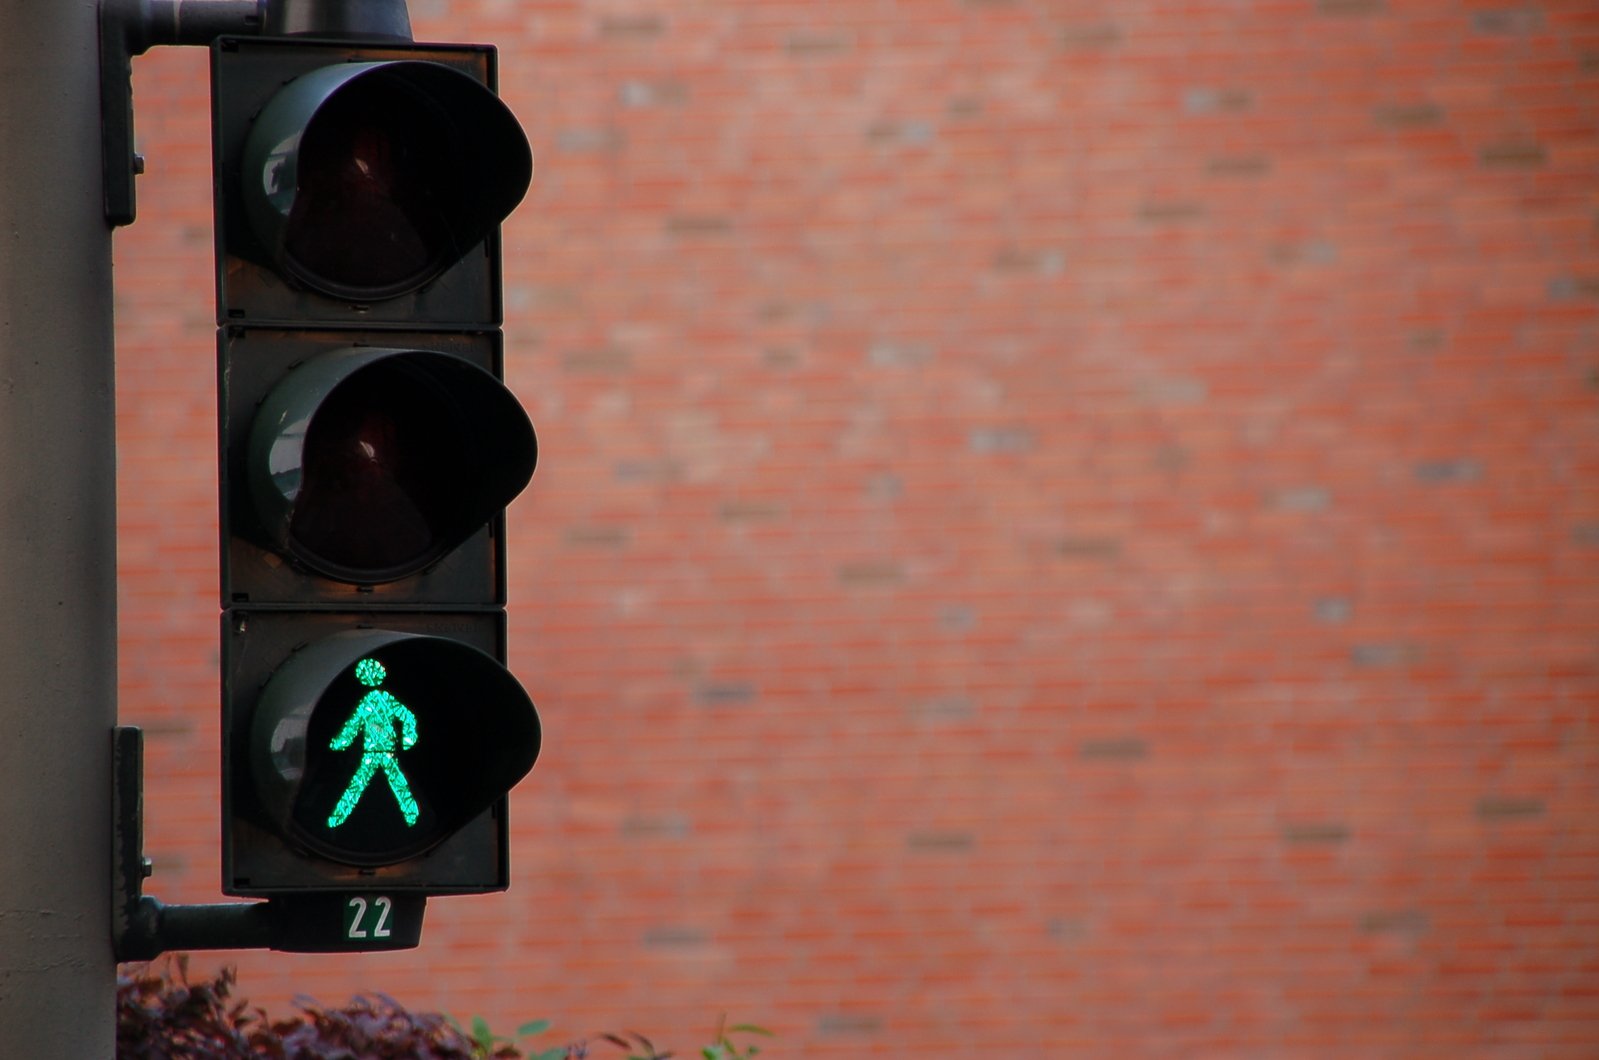 traffic light displaying green pedestrian signal and brick wall